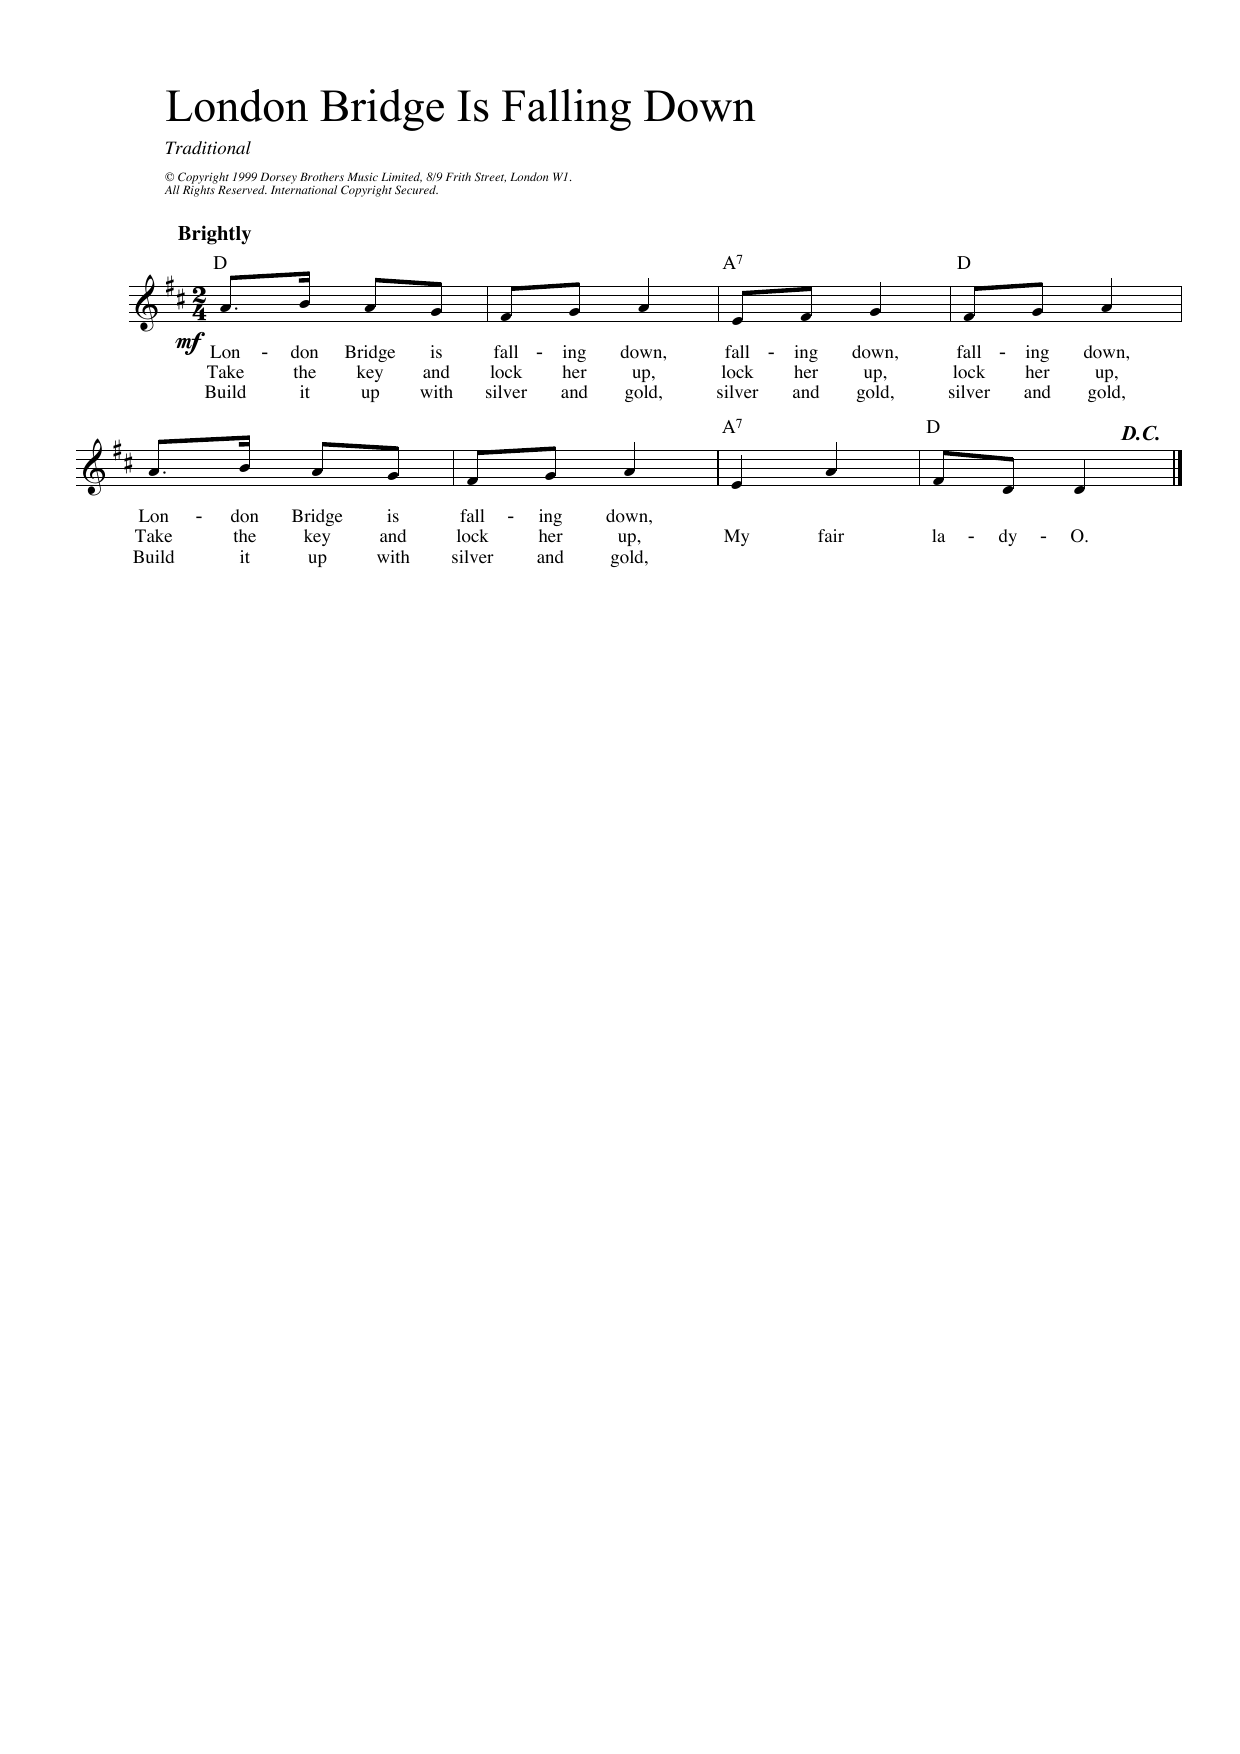 Traditional London Bridge sheet music notes and chords arranged for UkeBuddy